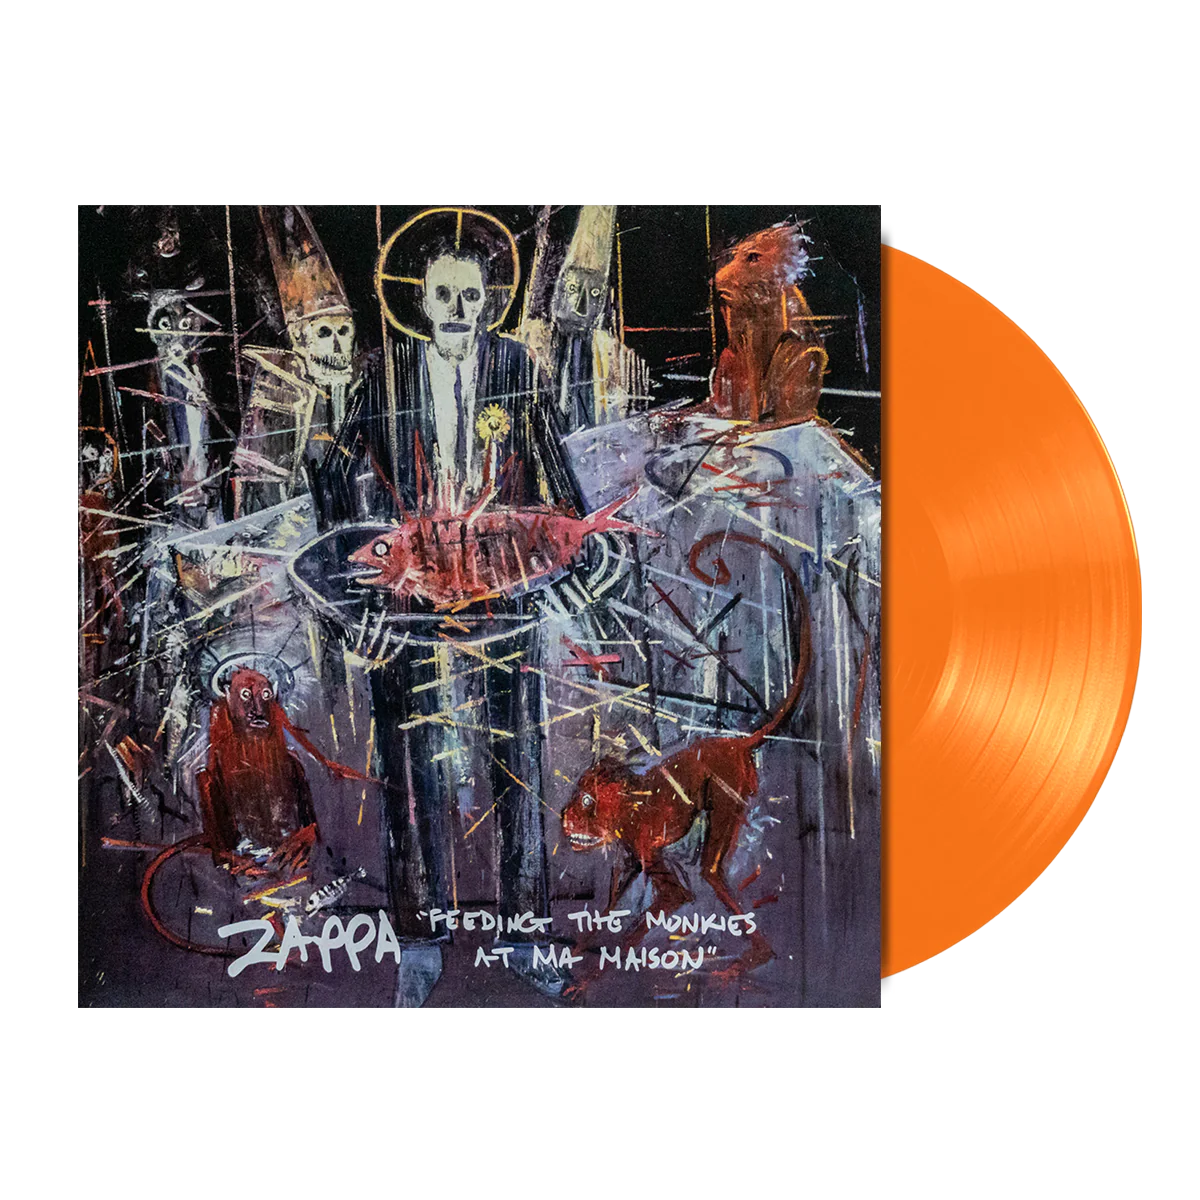 Frank Zappa Feeding The Monkeys At Ma Maison Album On Limited Edition Orange Color Variant Vinyl LP Record